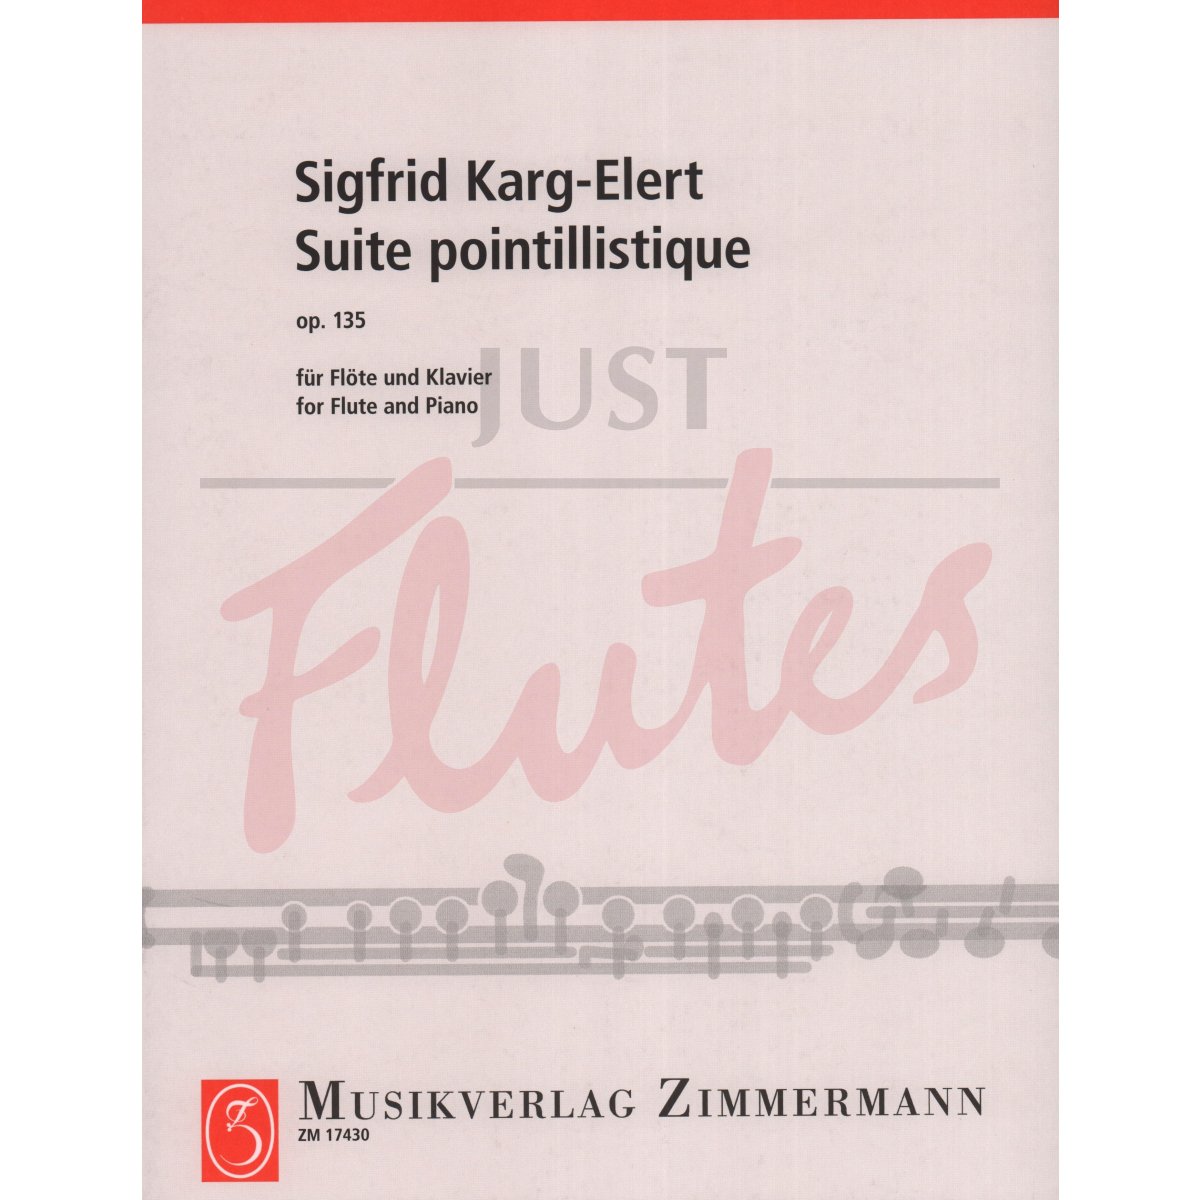 Suite Pointillistique for Flute and Piano